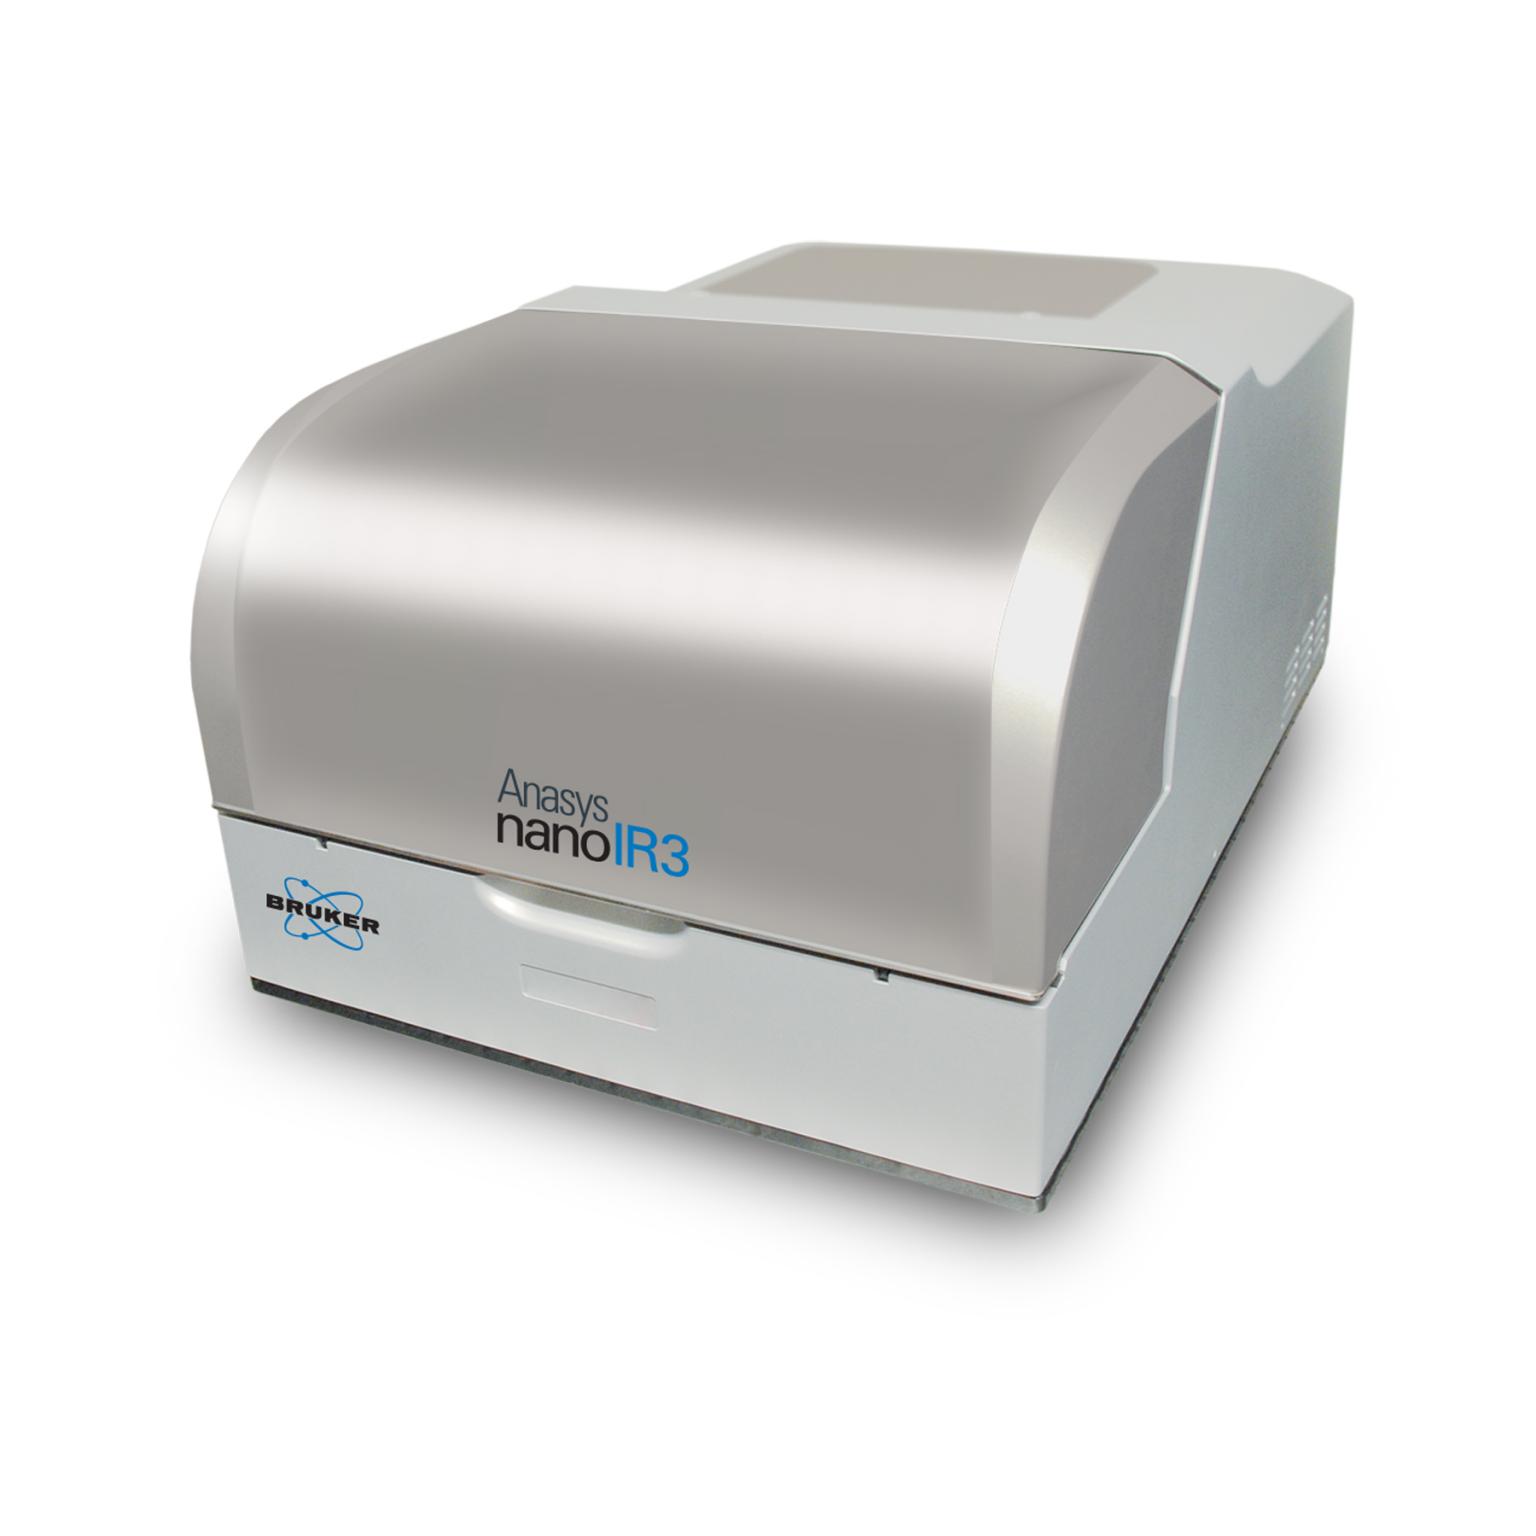 Anasys nanoIR3 Spectrometer